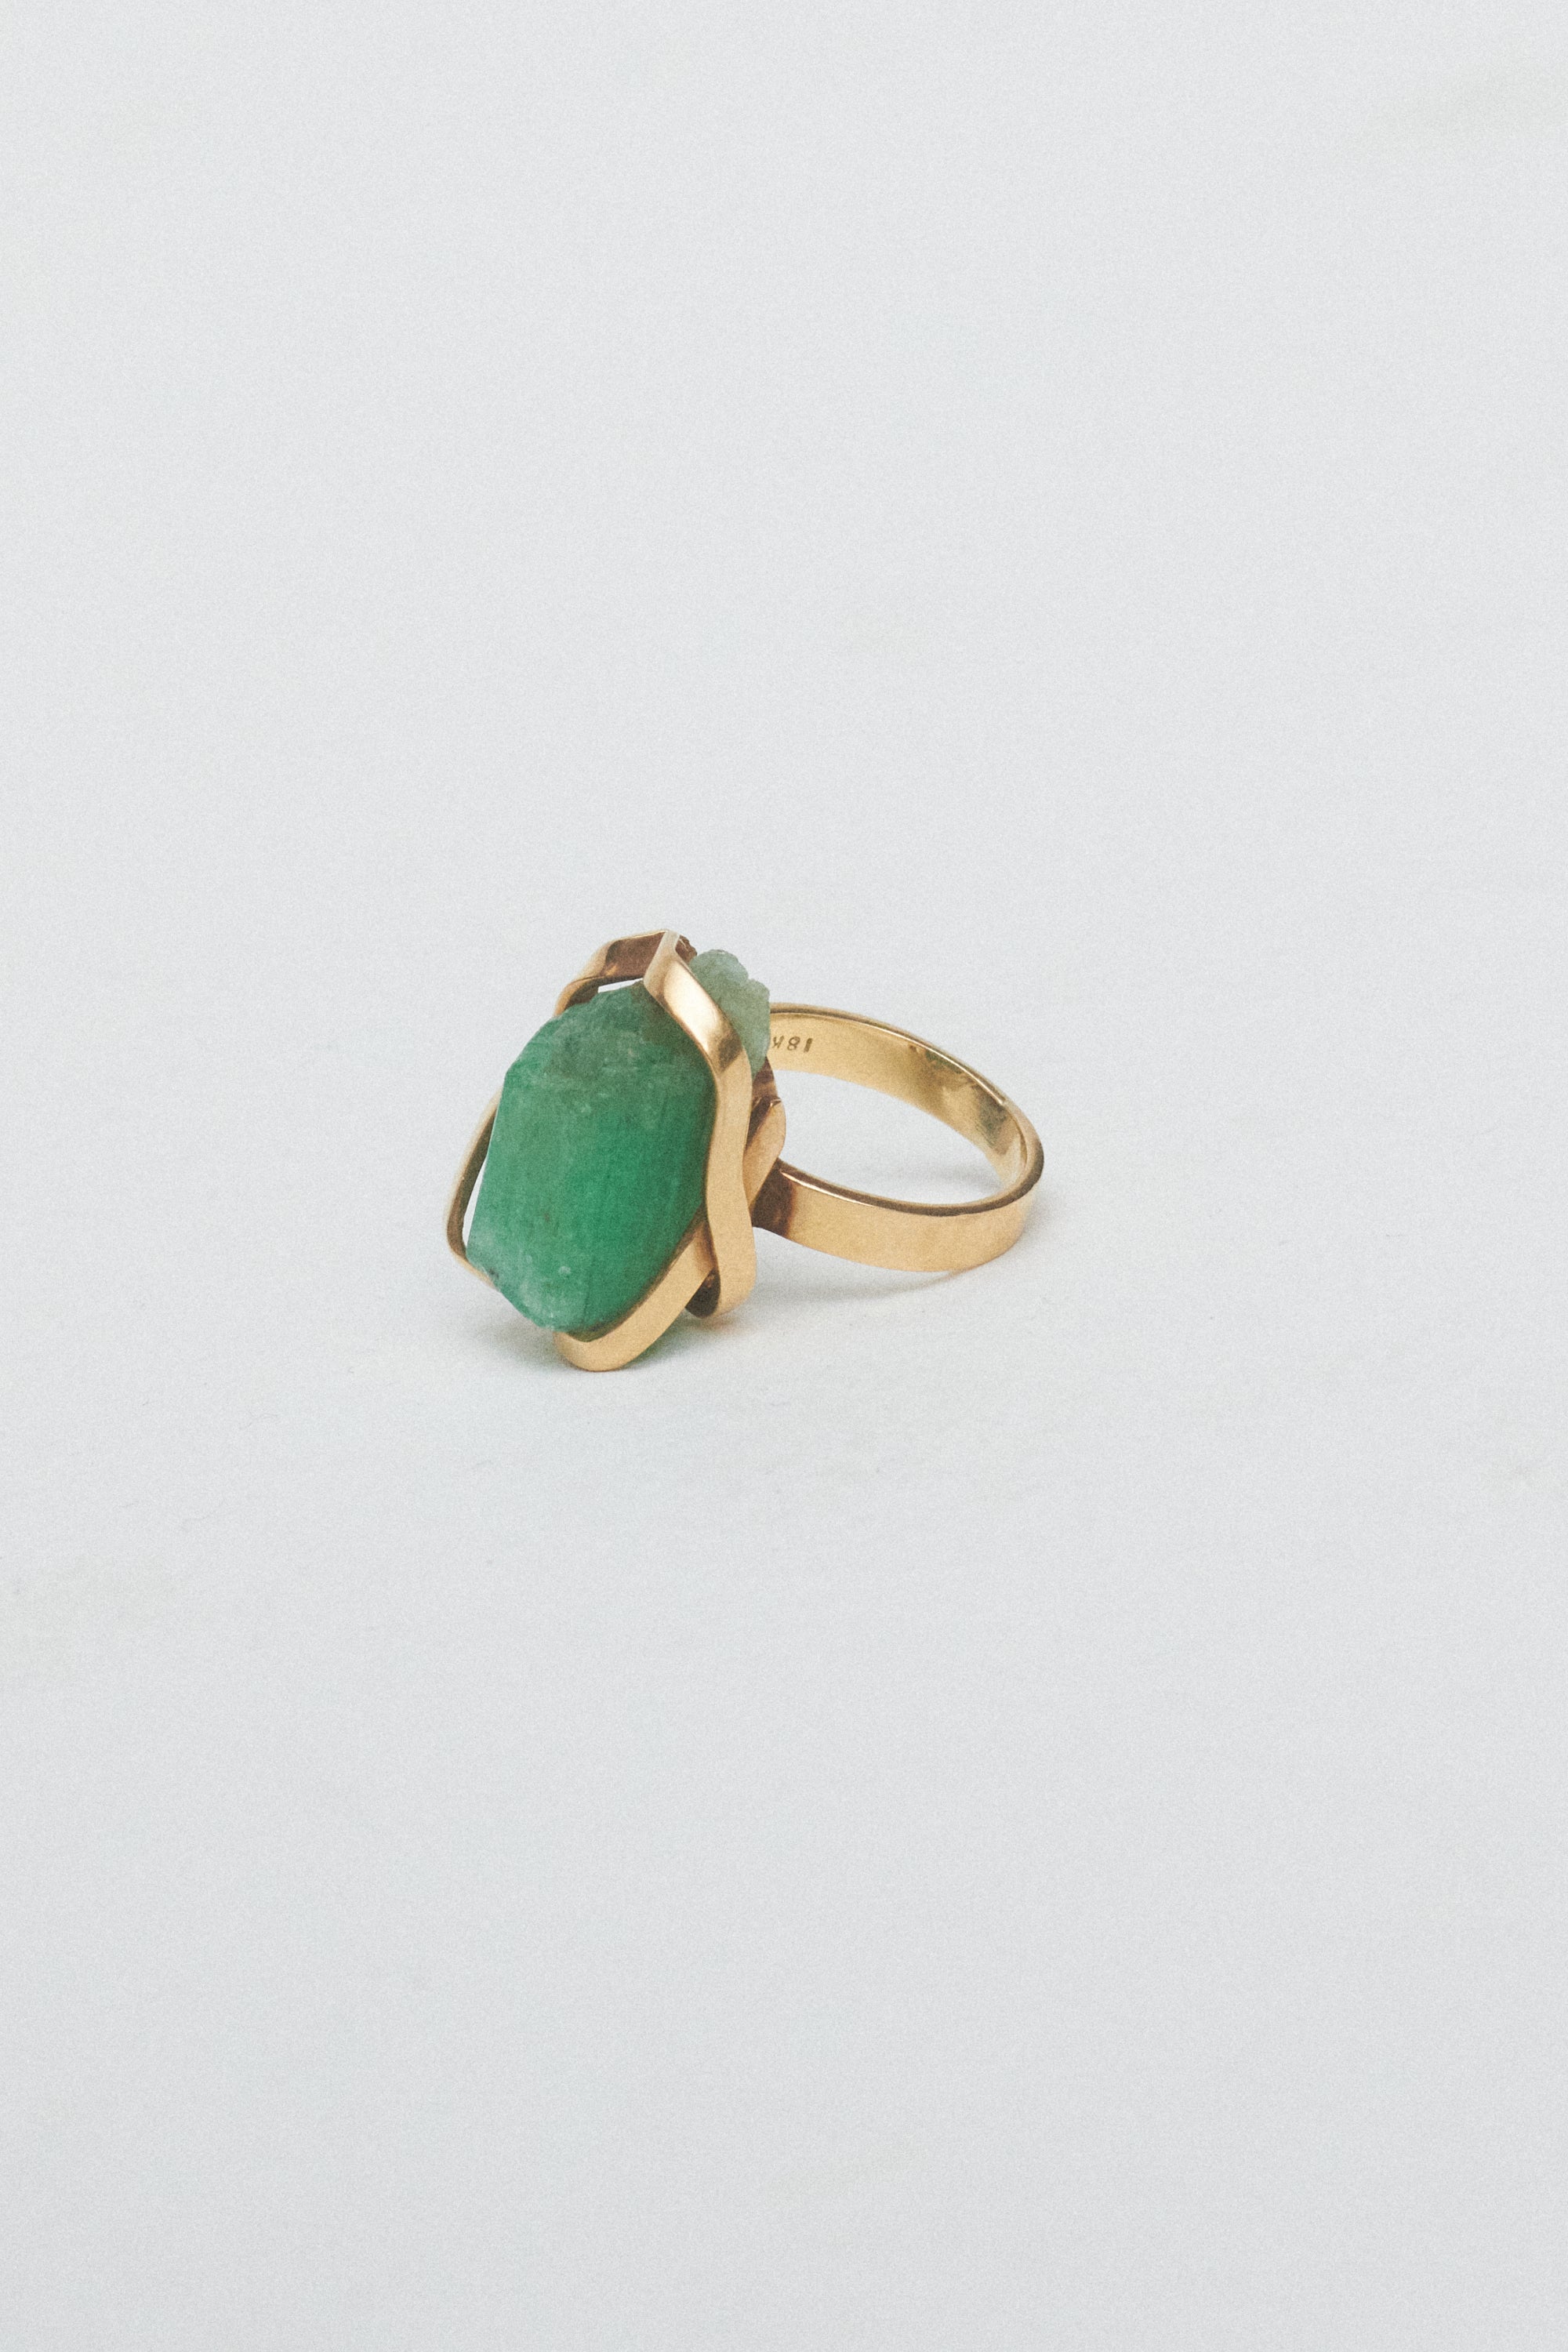 Raw Emerald in 18k Gold Ring - Desert Vintage